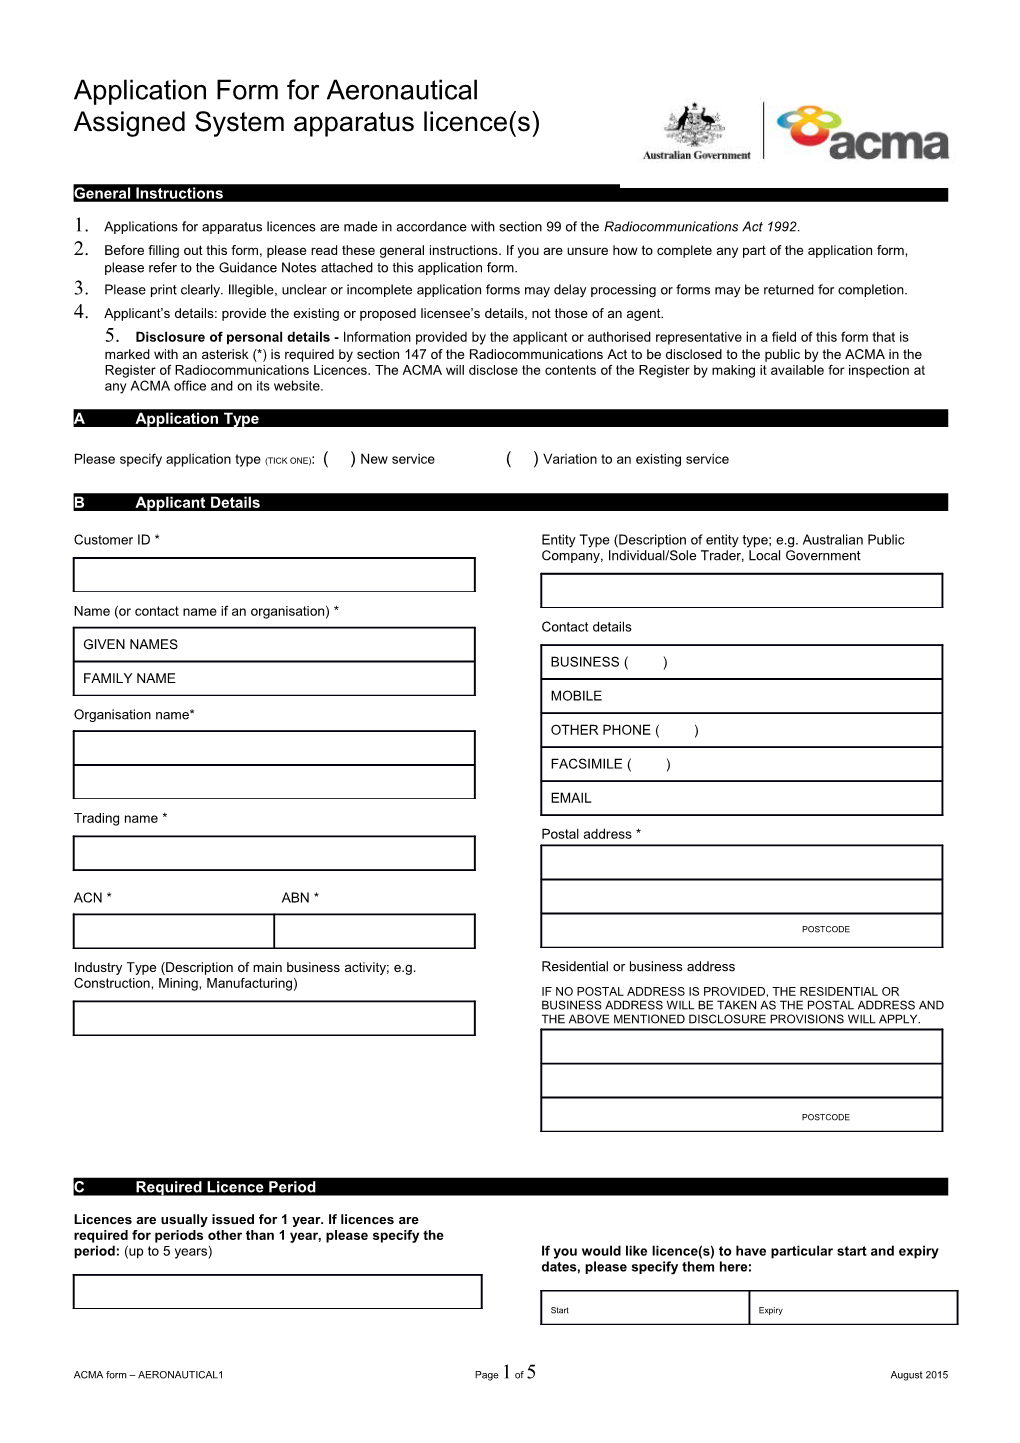 ACMA Form Aeronautical1page 1 of 4August 2015